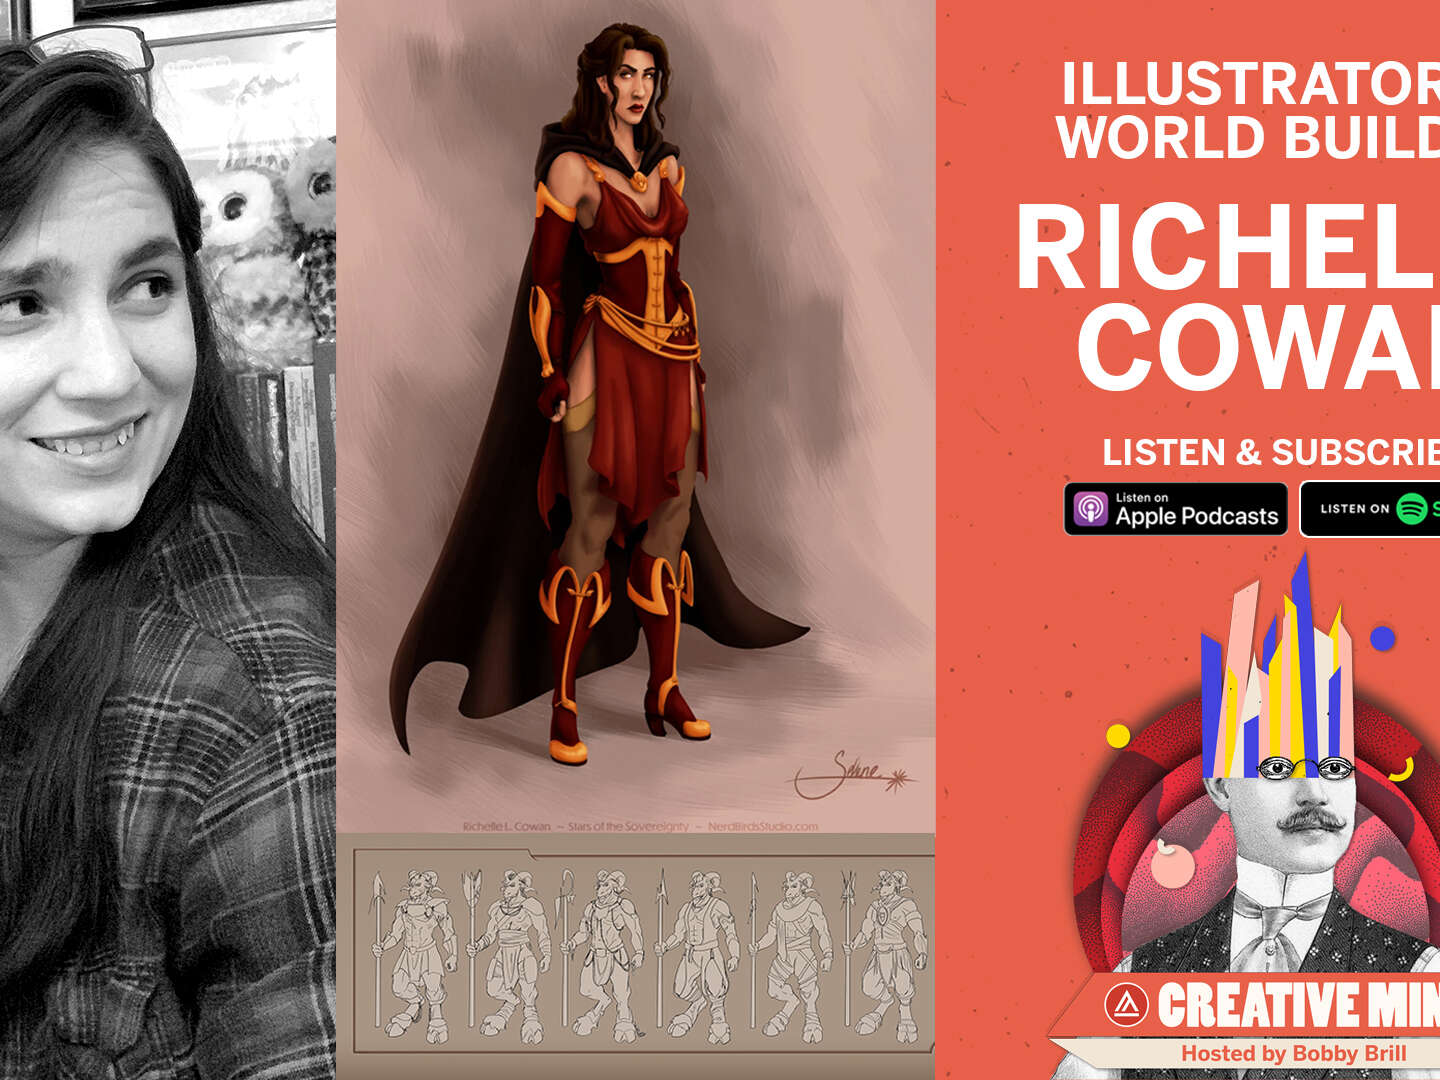 Richelle Cowan on Creative Mind Podcast